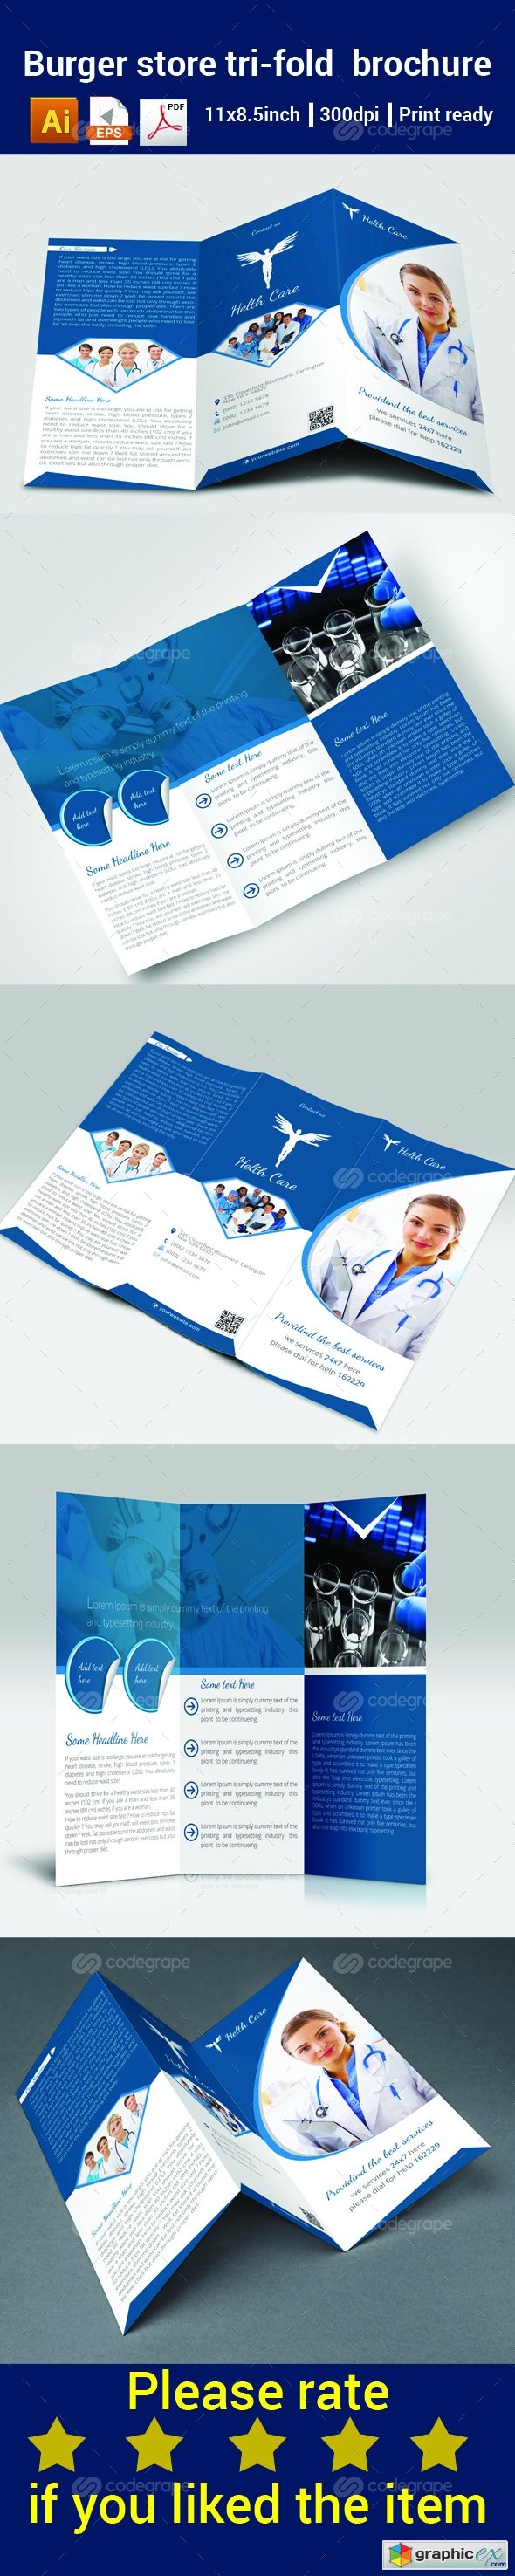  Health Care Tri-fold Brochure